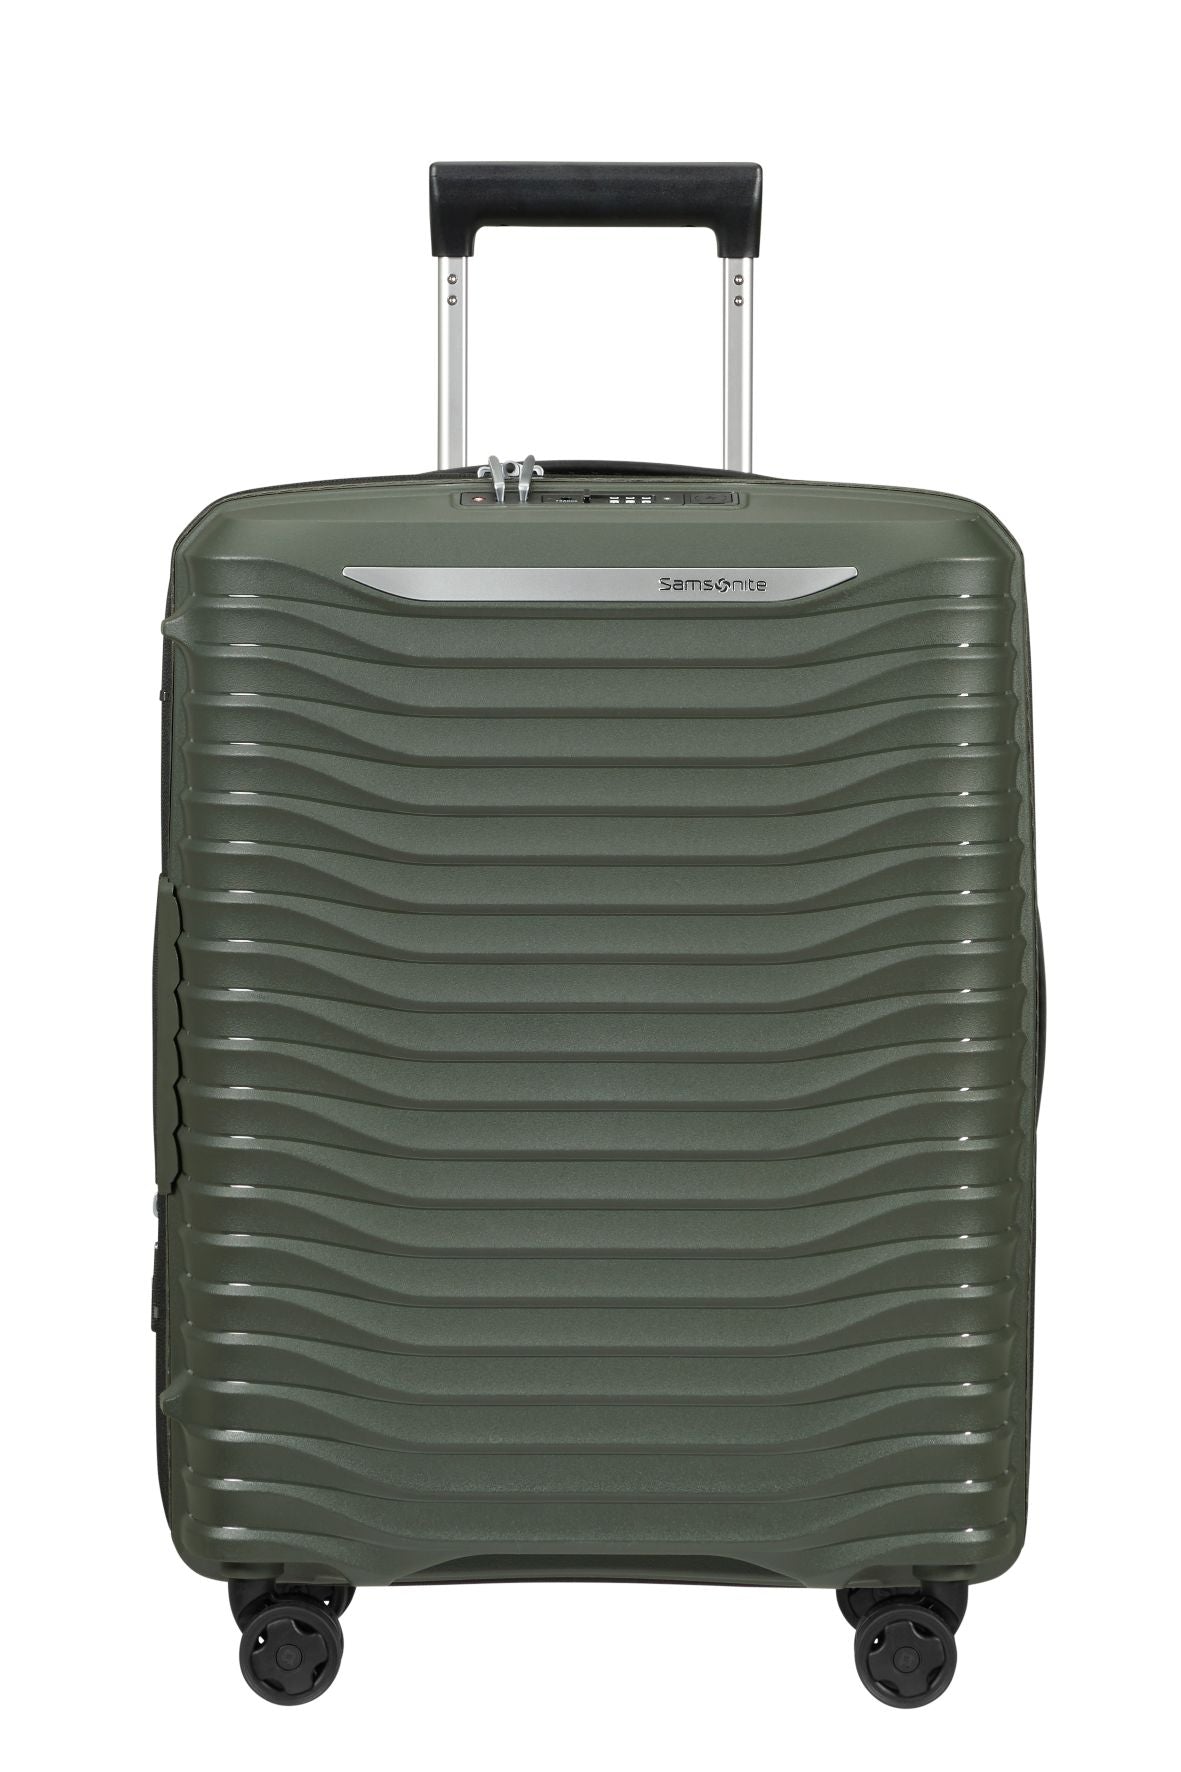 Samsonite - Upscape 55cm Small Suitcase - Climbing Ivy-1